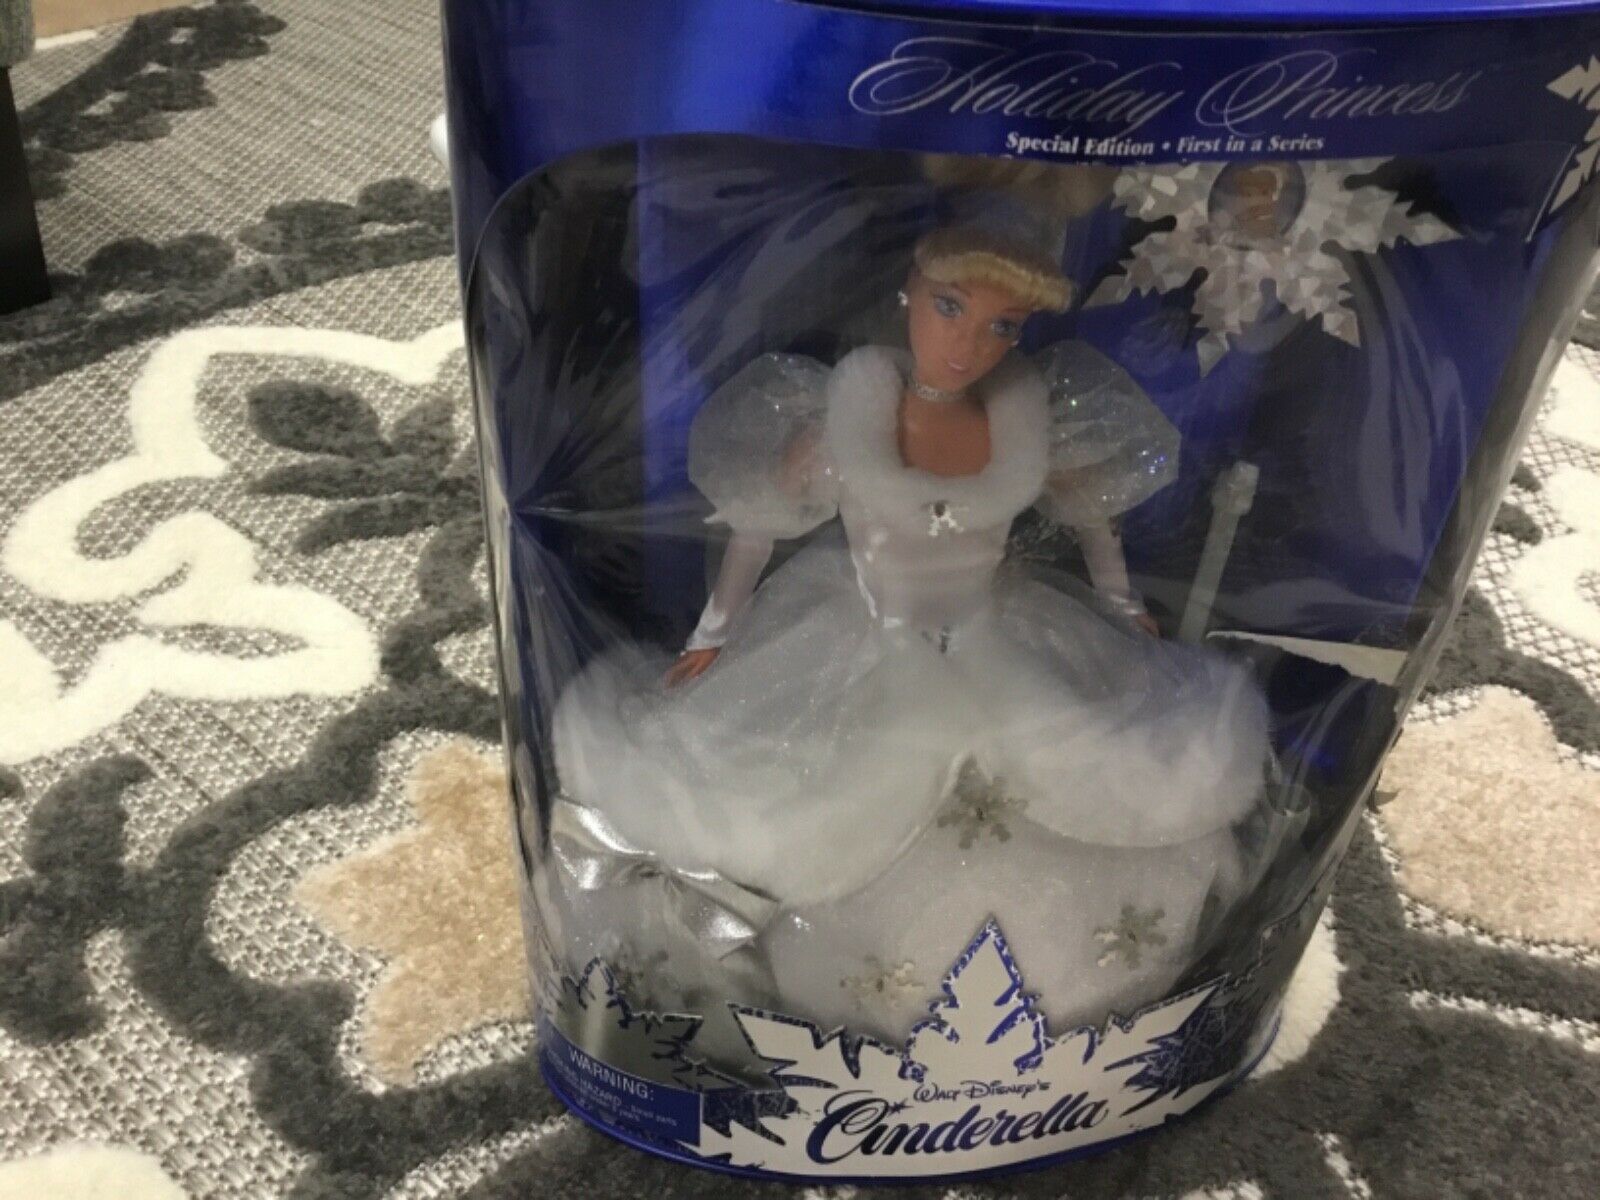 Holiday Princess Walt Disney's Cinderella 1996 Barbie Doll